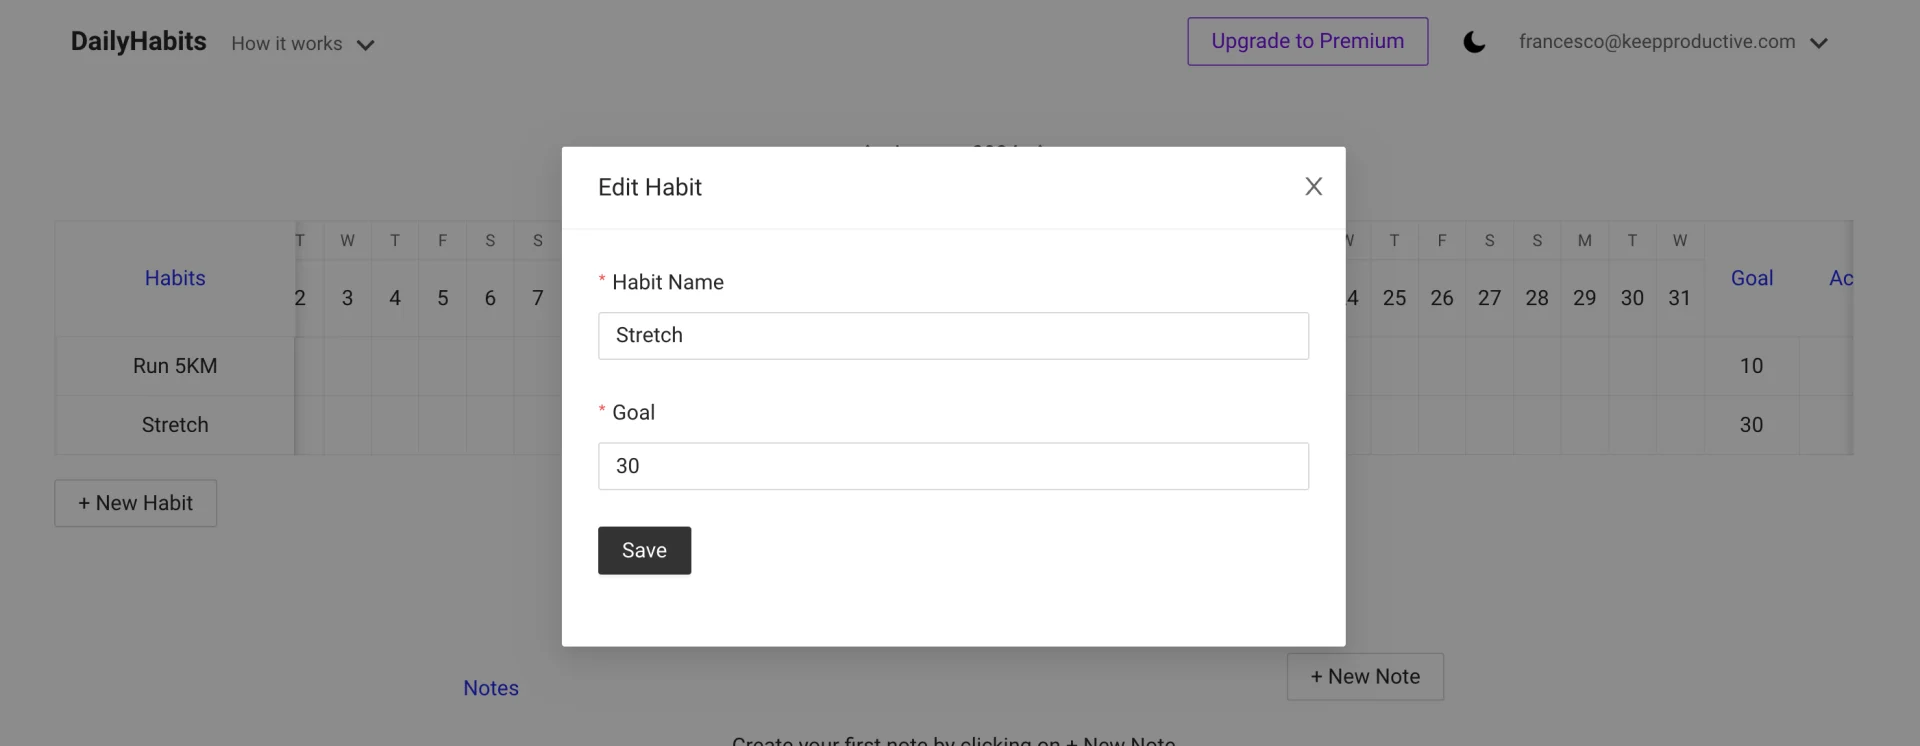 Habit Tracking in DailyHabits